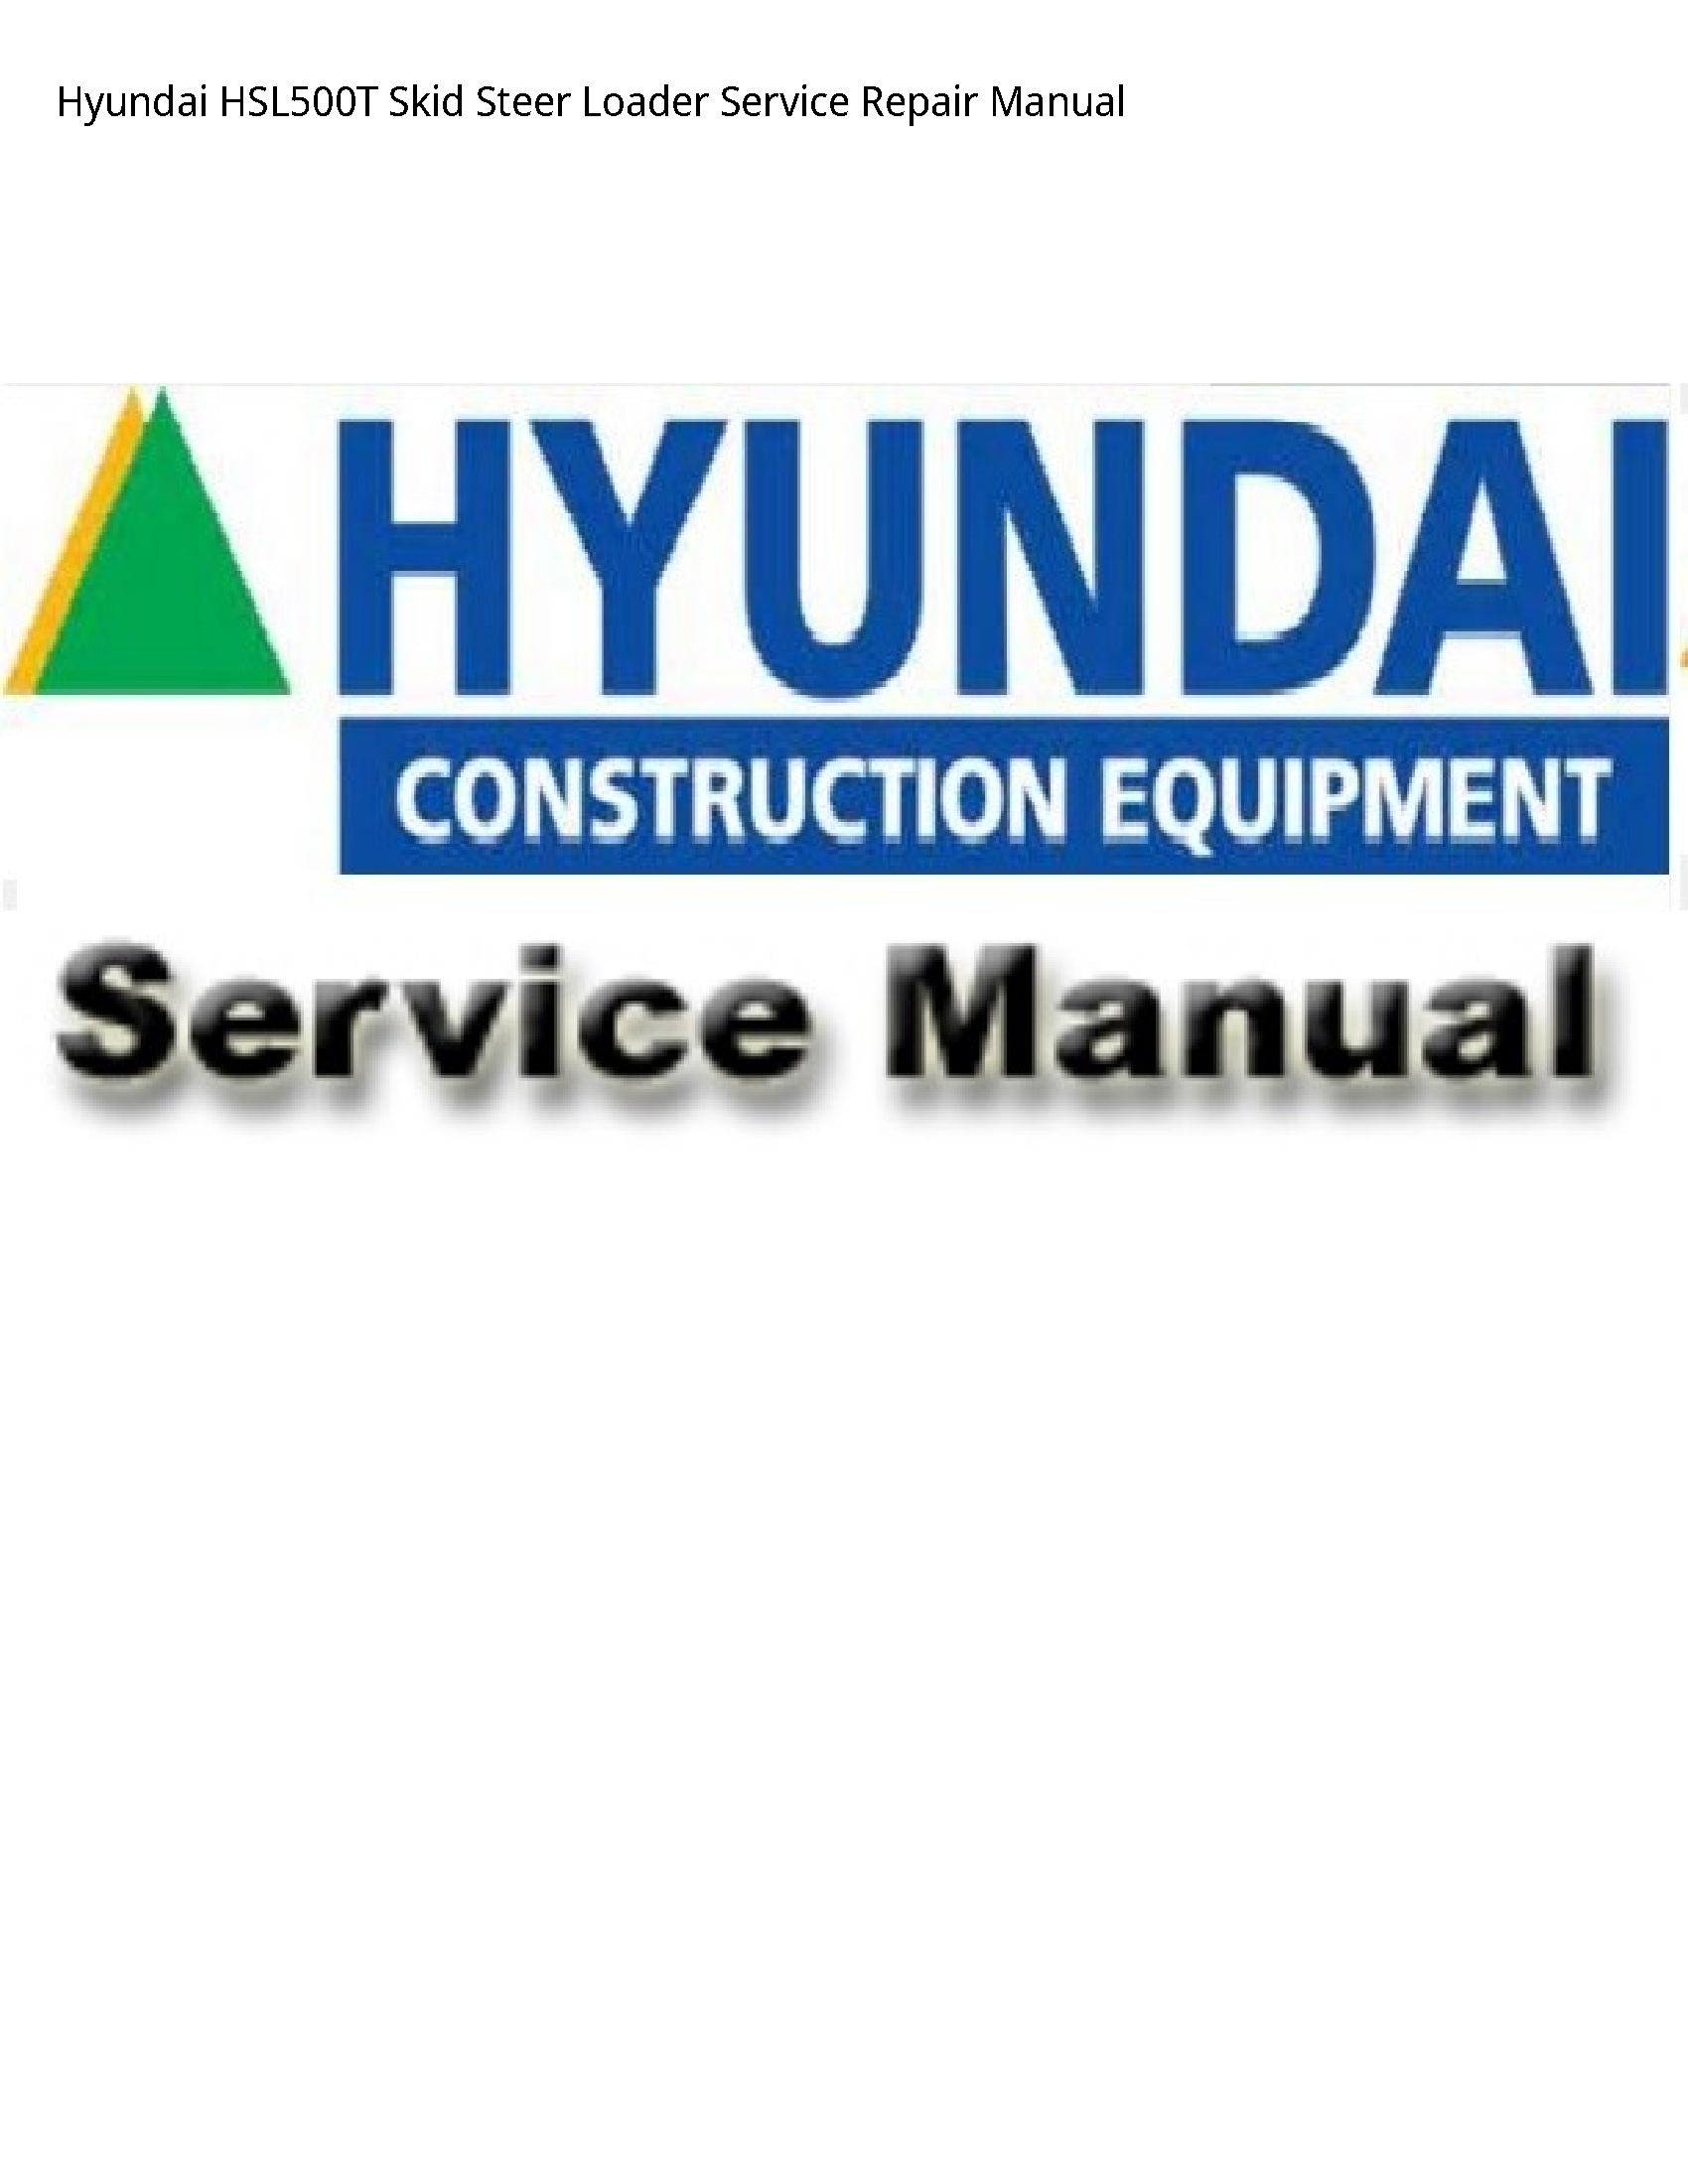 Hyundai HSL500T Skid Steer Loader manual